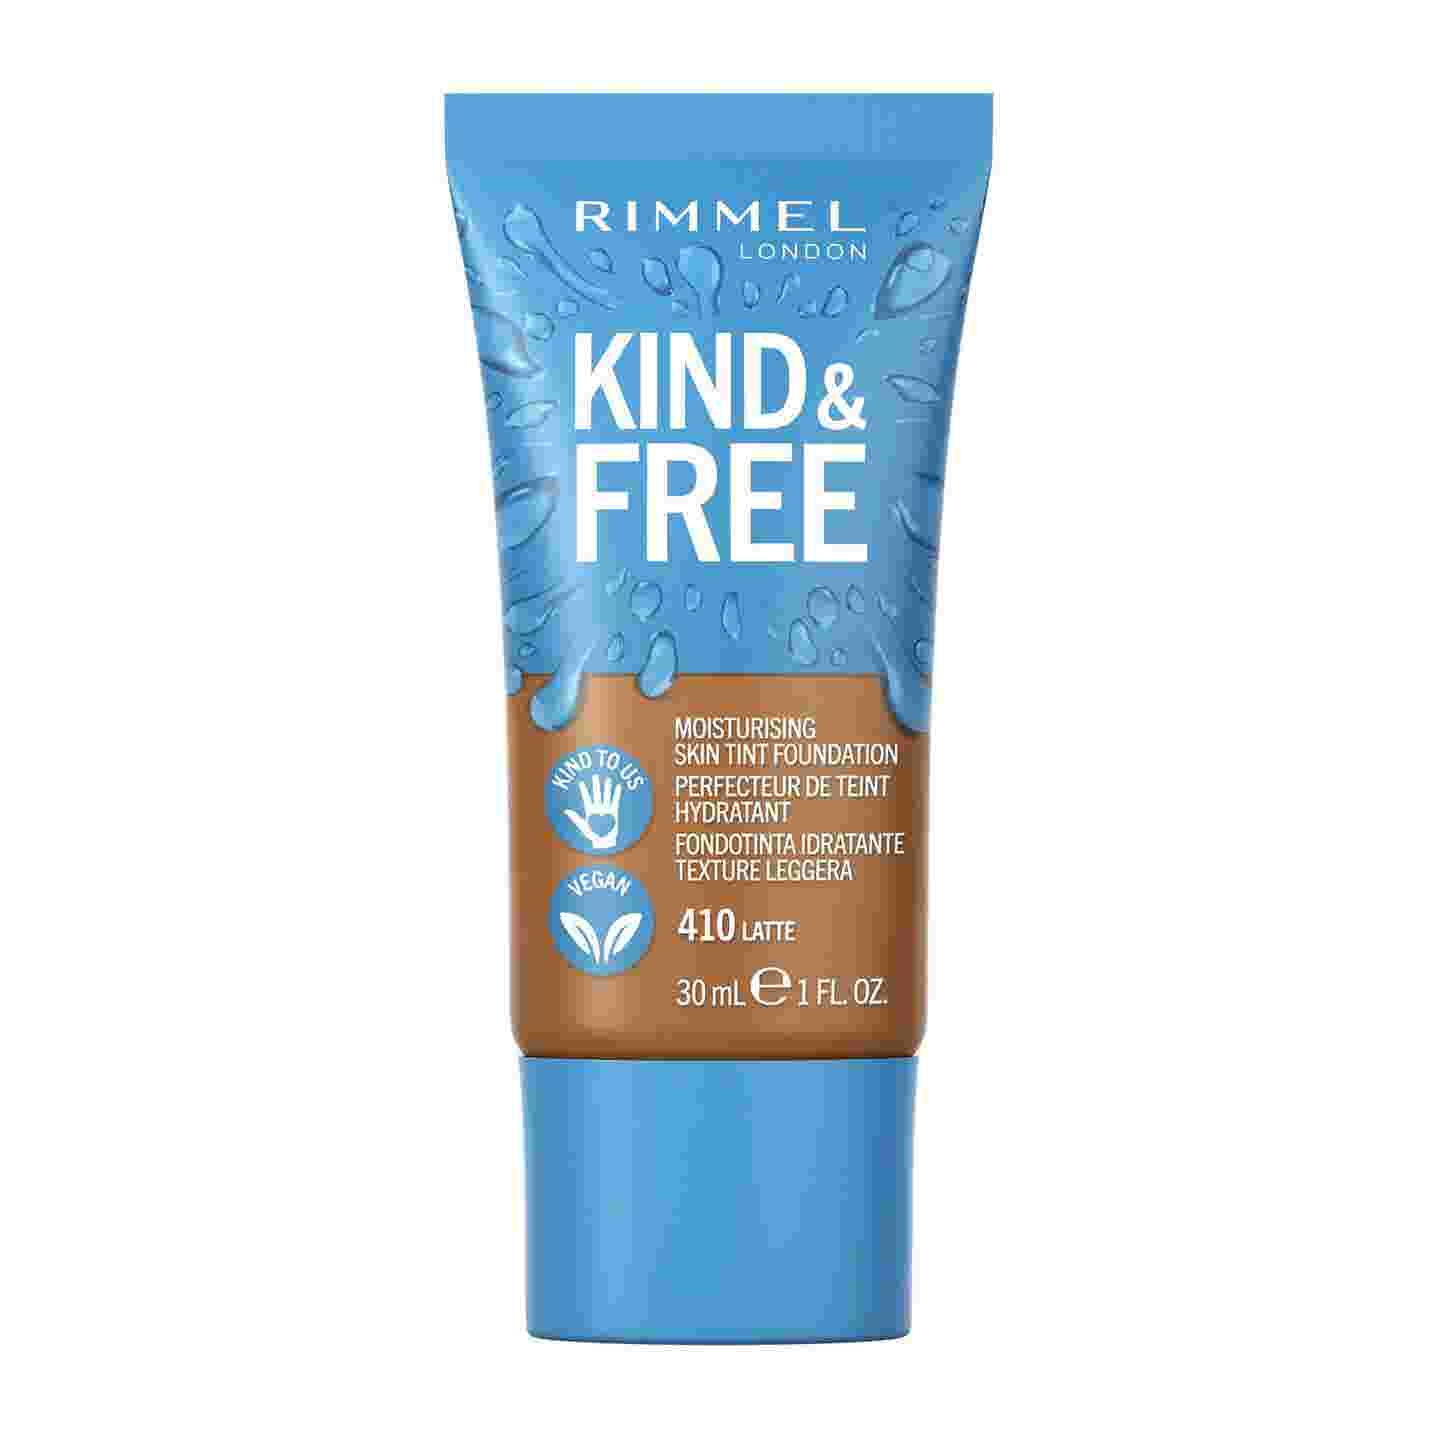 Rimmel London Kind & Free Moisturising Skin Tint 30Ml - Latte - Premium Health & Beauty from Rimmel London - Just Rs 2350! Shop now at Cozmetica